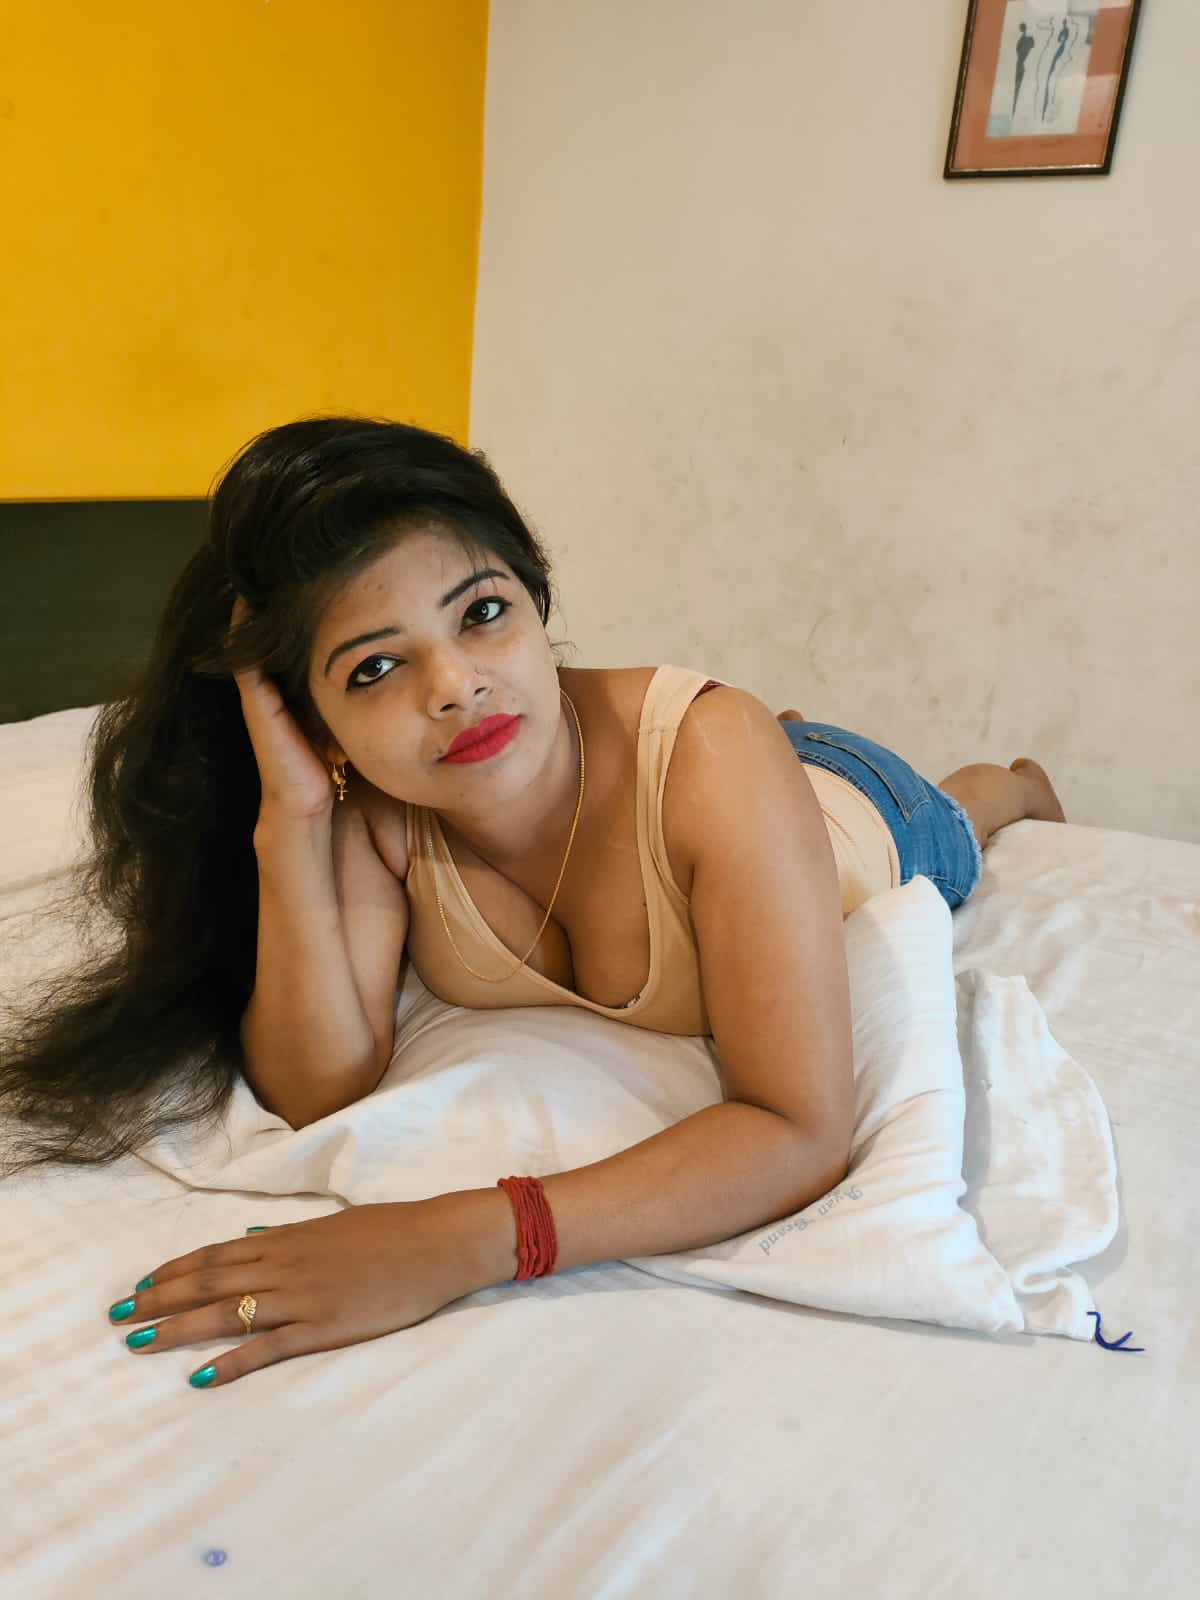 full service hot sex girl service in visakhapatnam call deepak